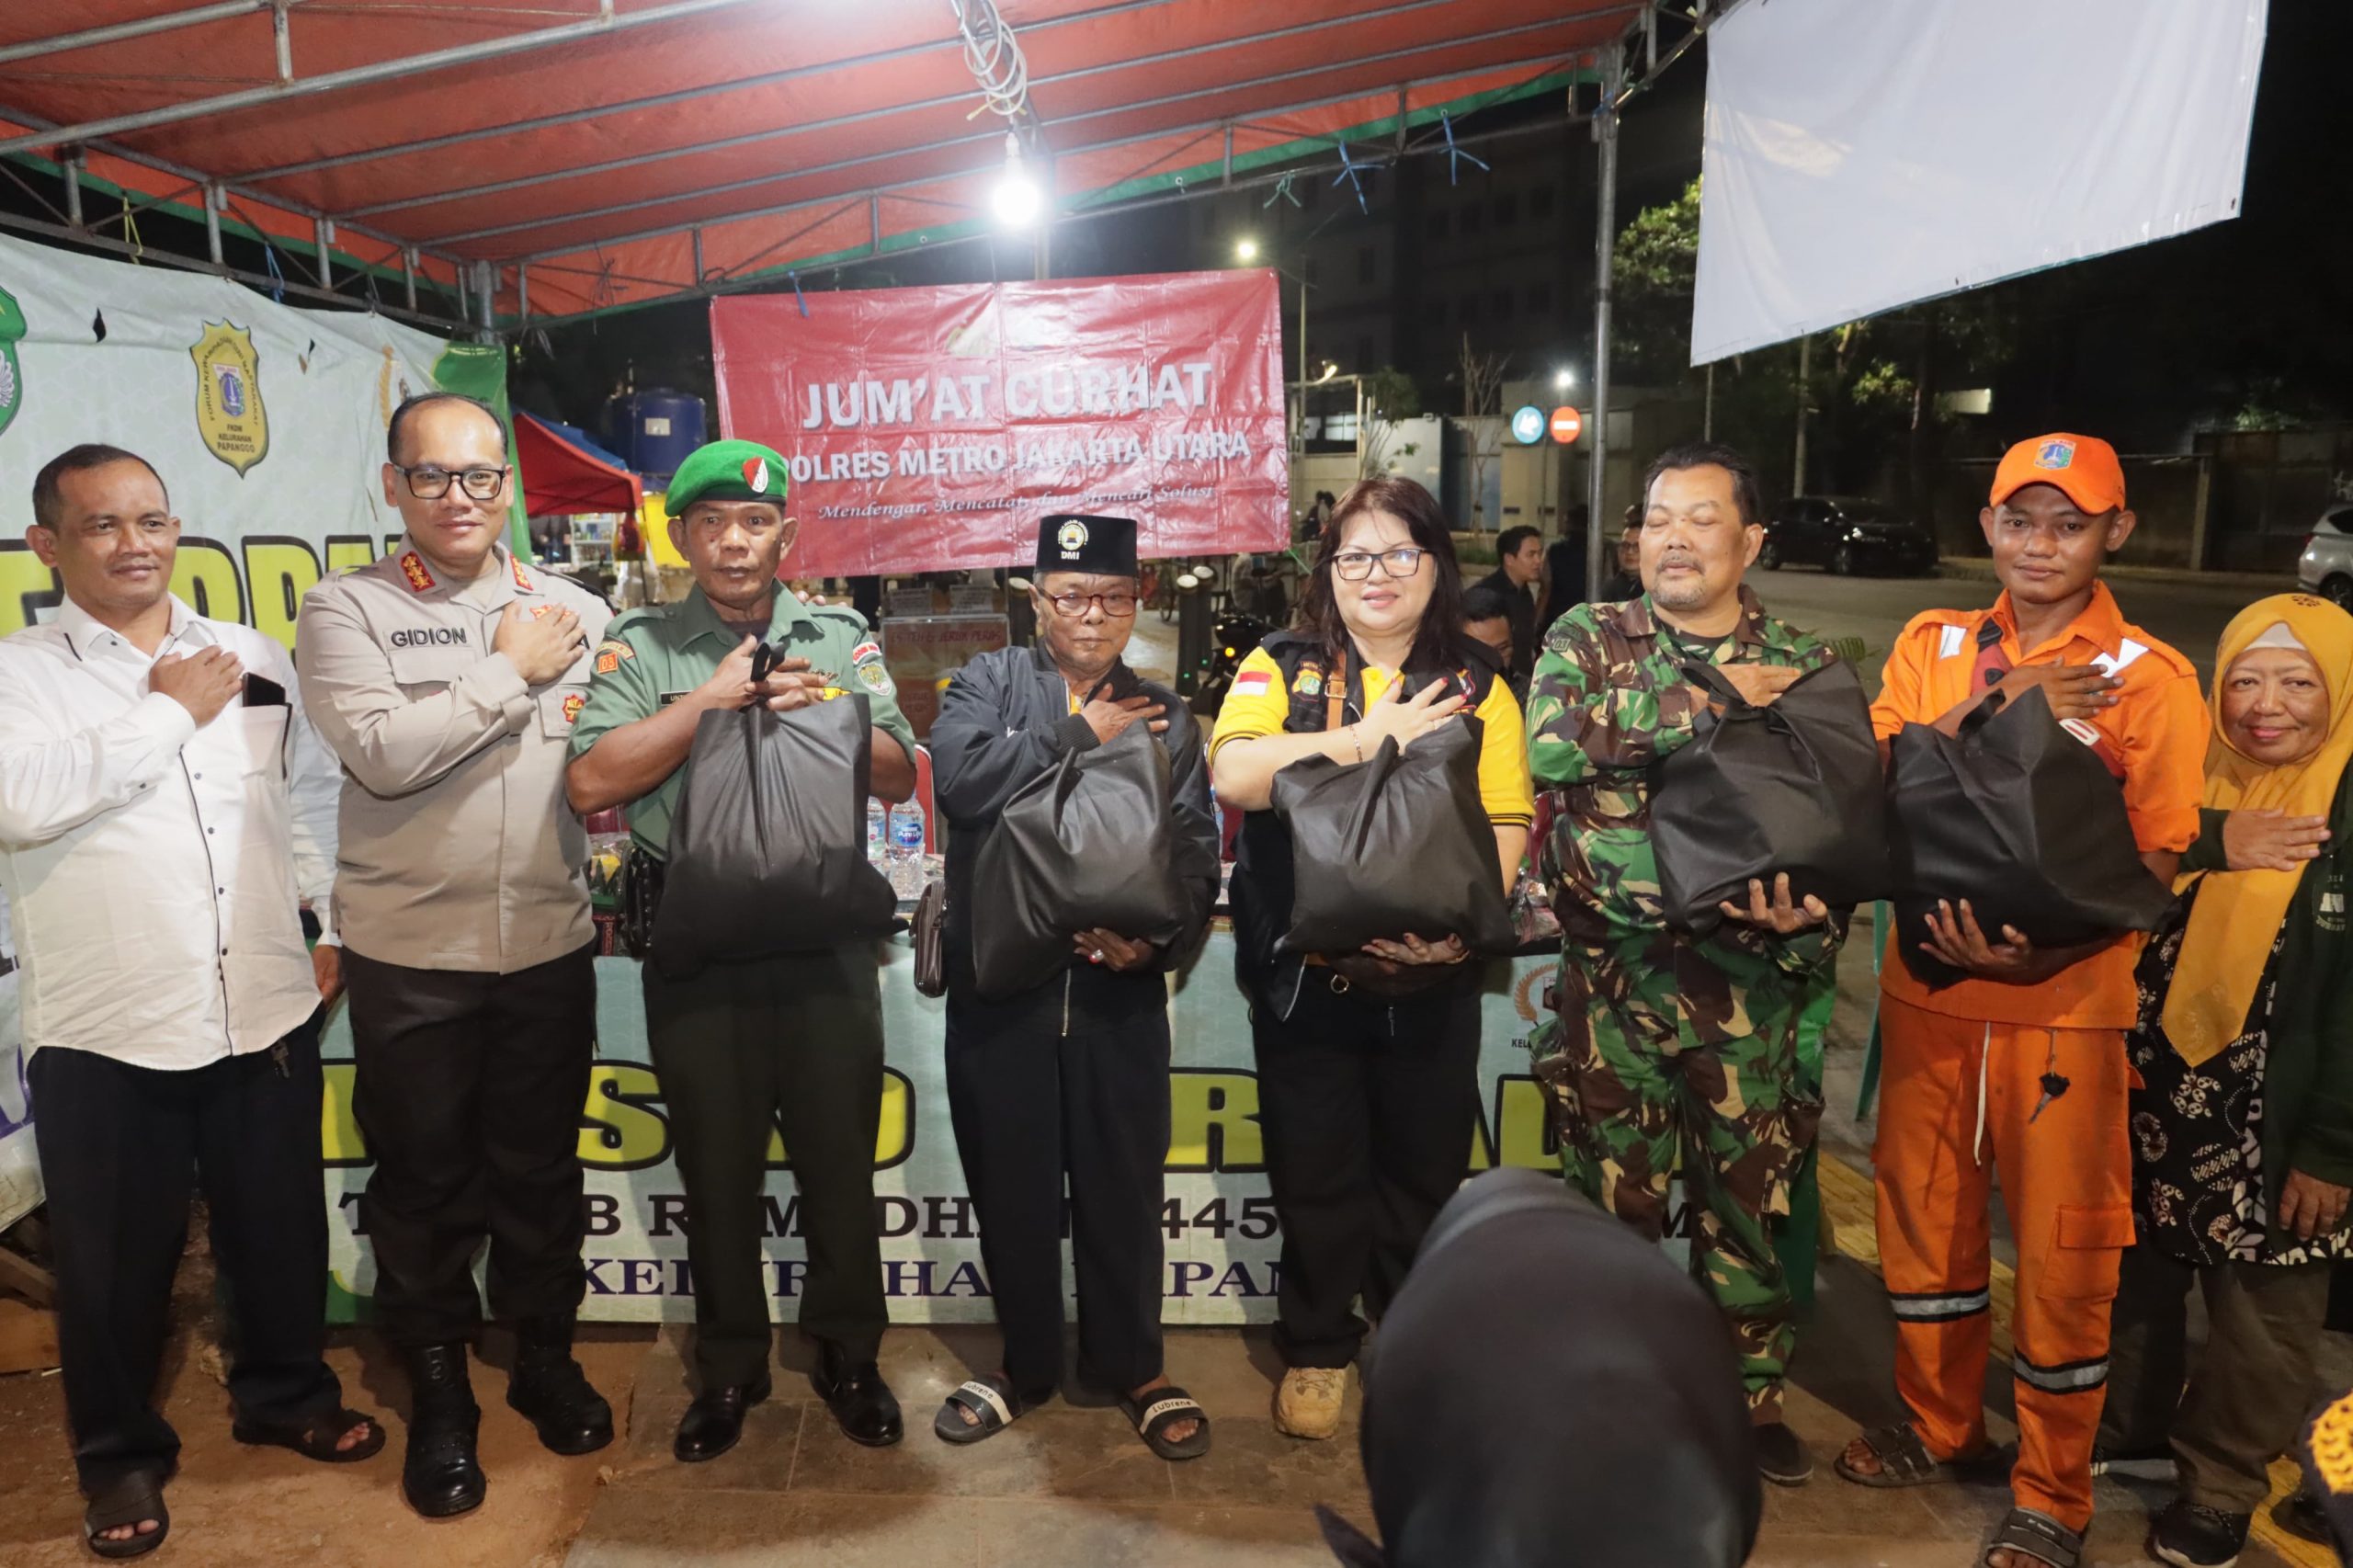 Jumat Curhat di Tanjung Priok Kapolres Ingatkan Jaga Rumsong